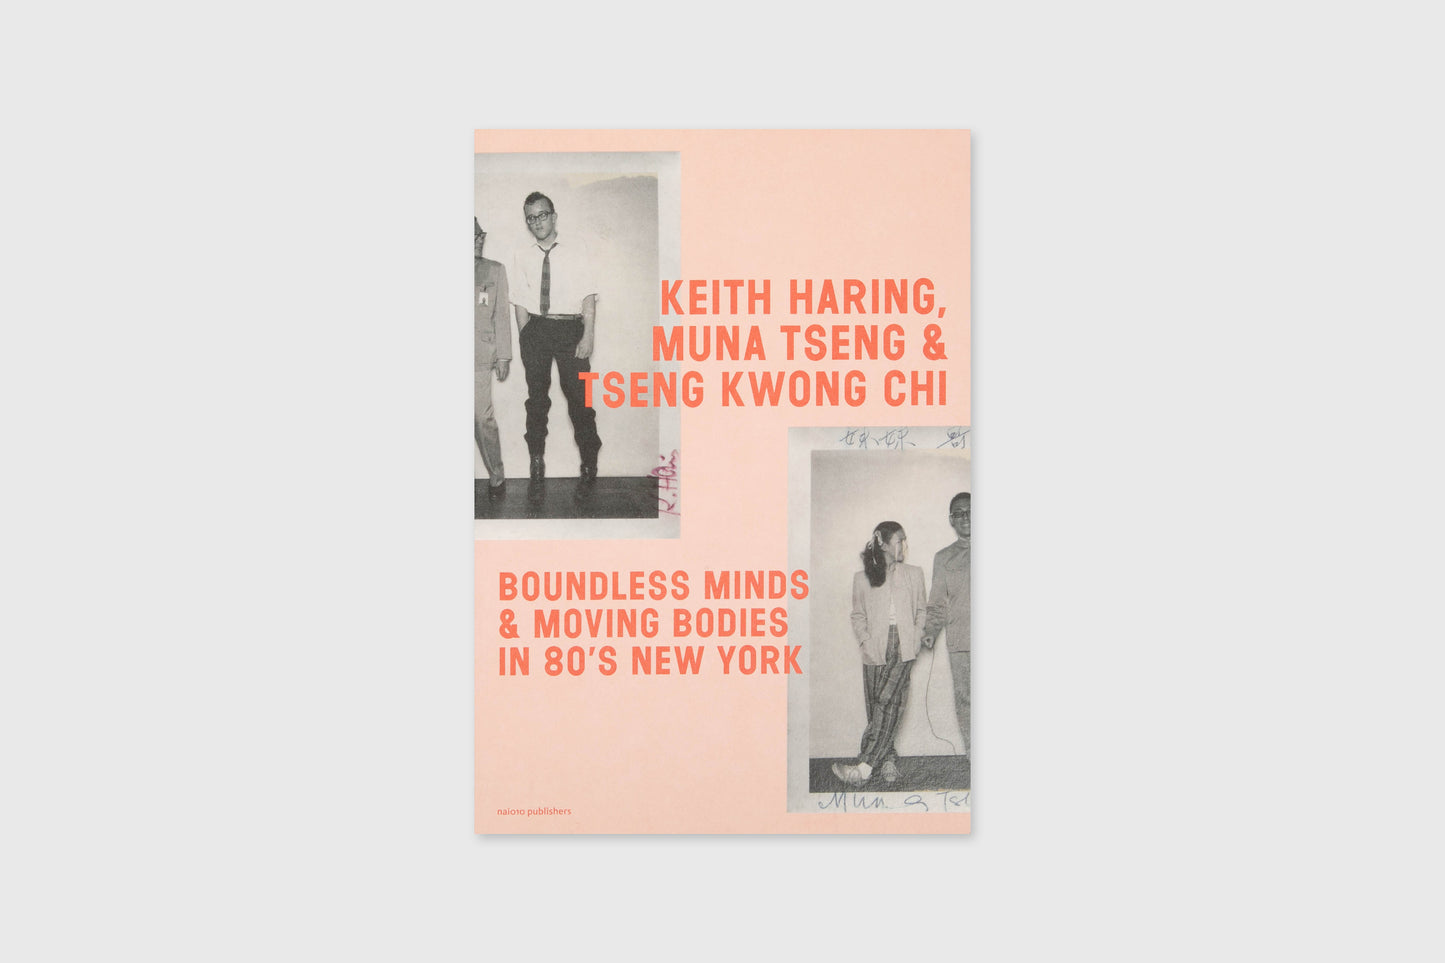 Keith Haring, Muna Tseng & Tseng Kwong Chi: Boundless Minds & Moving Bodies in the 80's New York